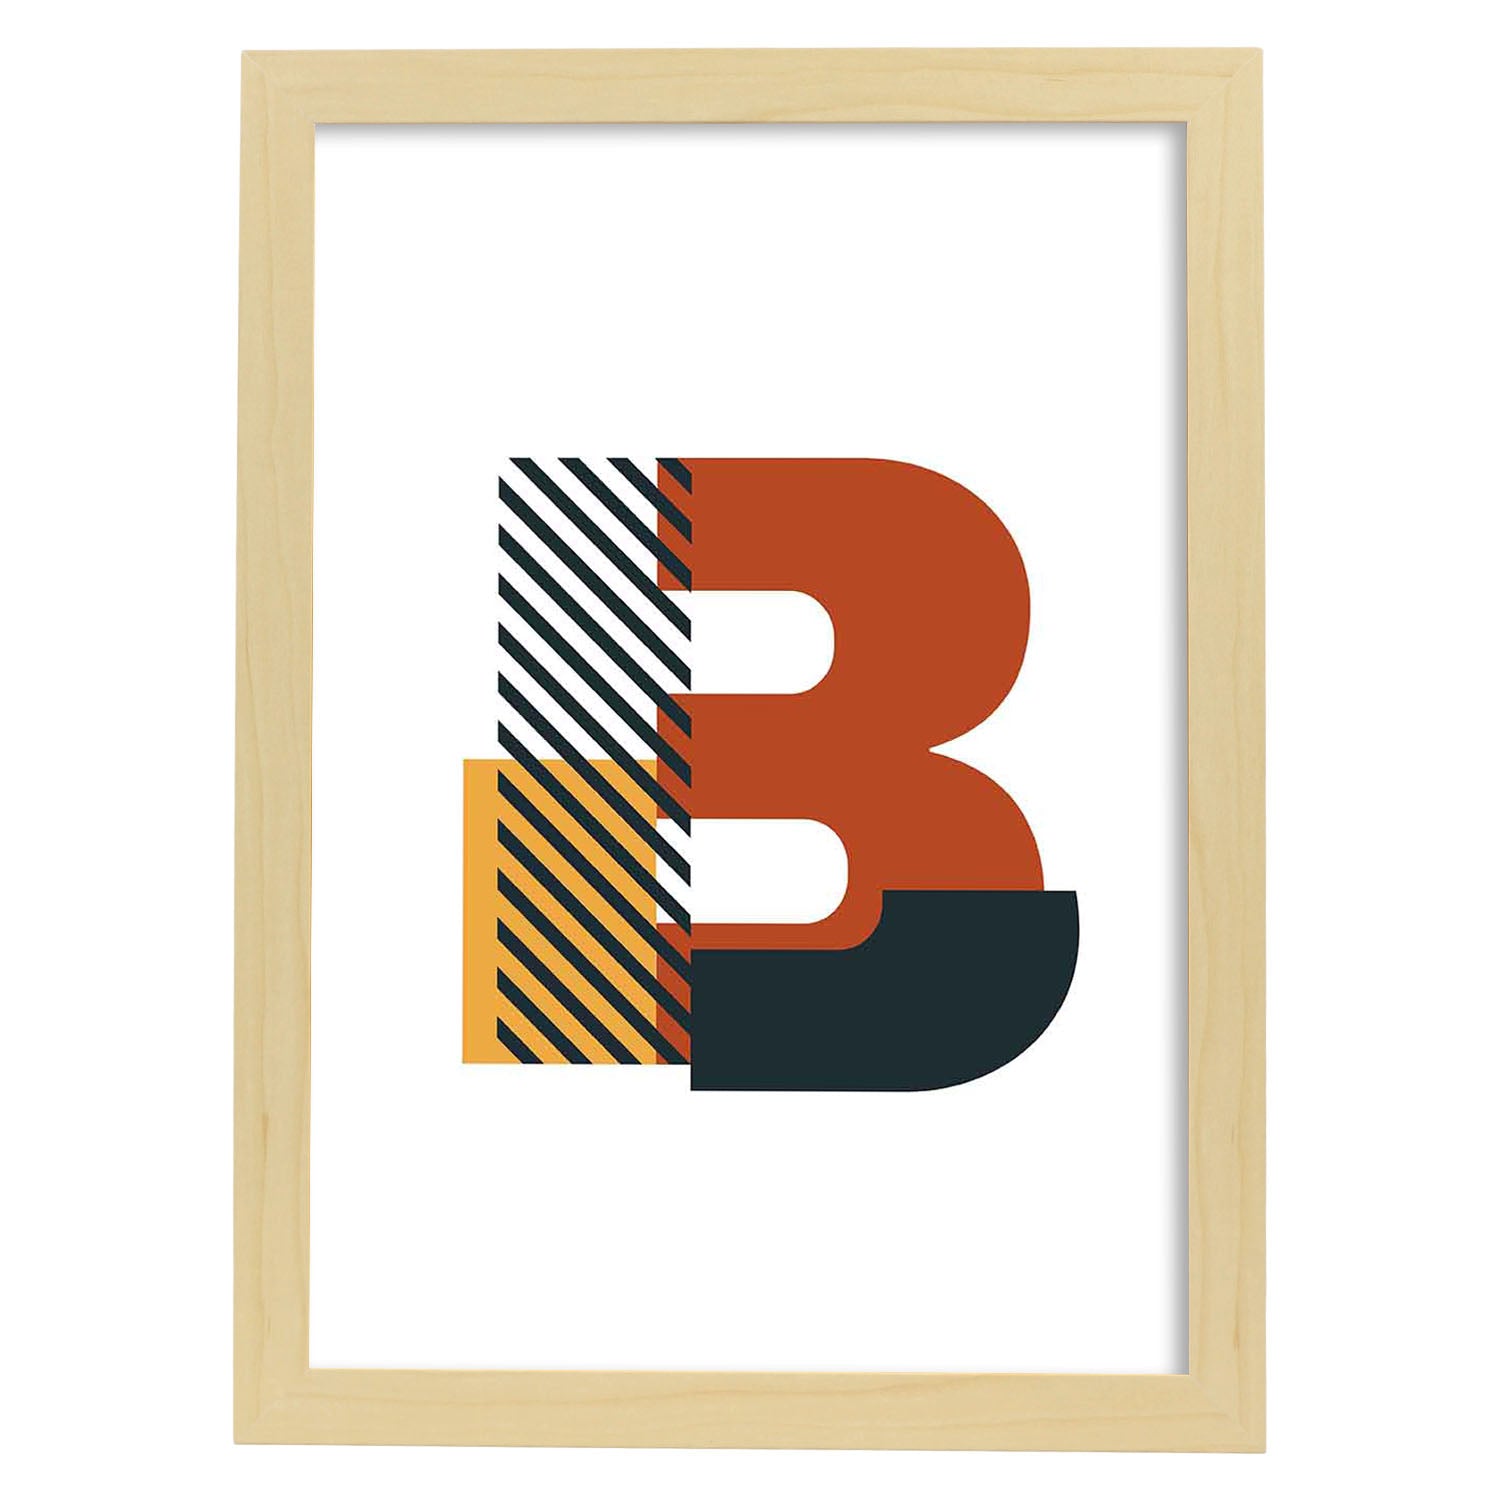 Poster de letra B. Lámina estilo Geometria con imágenes del alfabeto.-Artwork-Nacnic-A3-Marco Madera clara-Nacnic Estudio SL